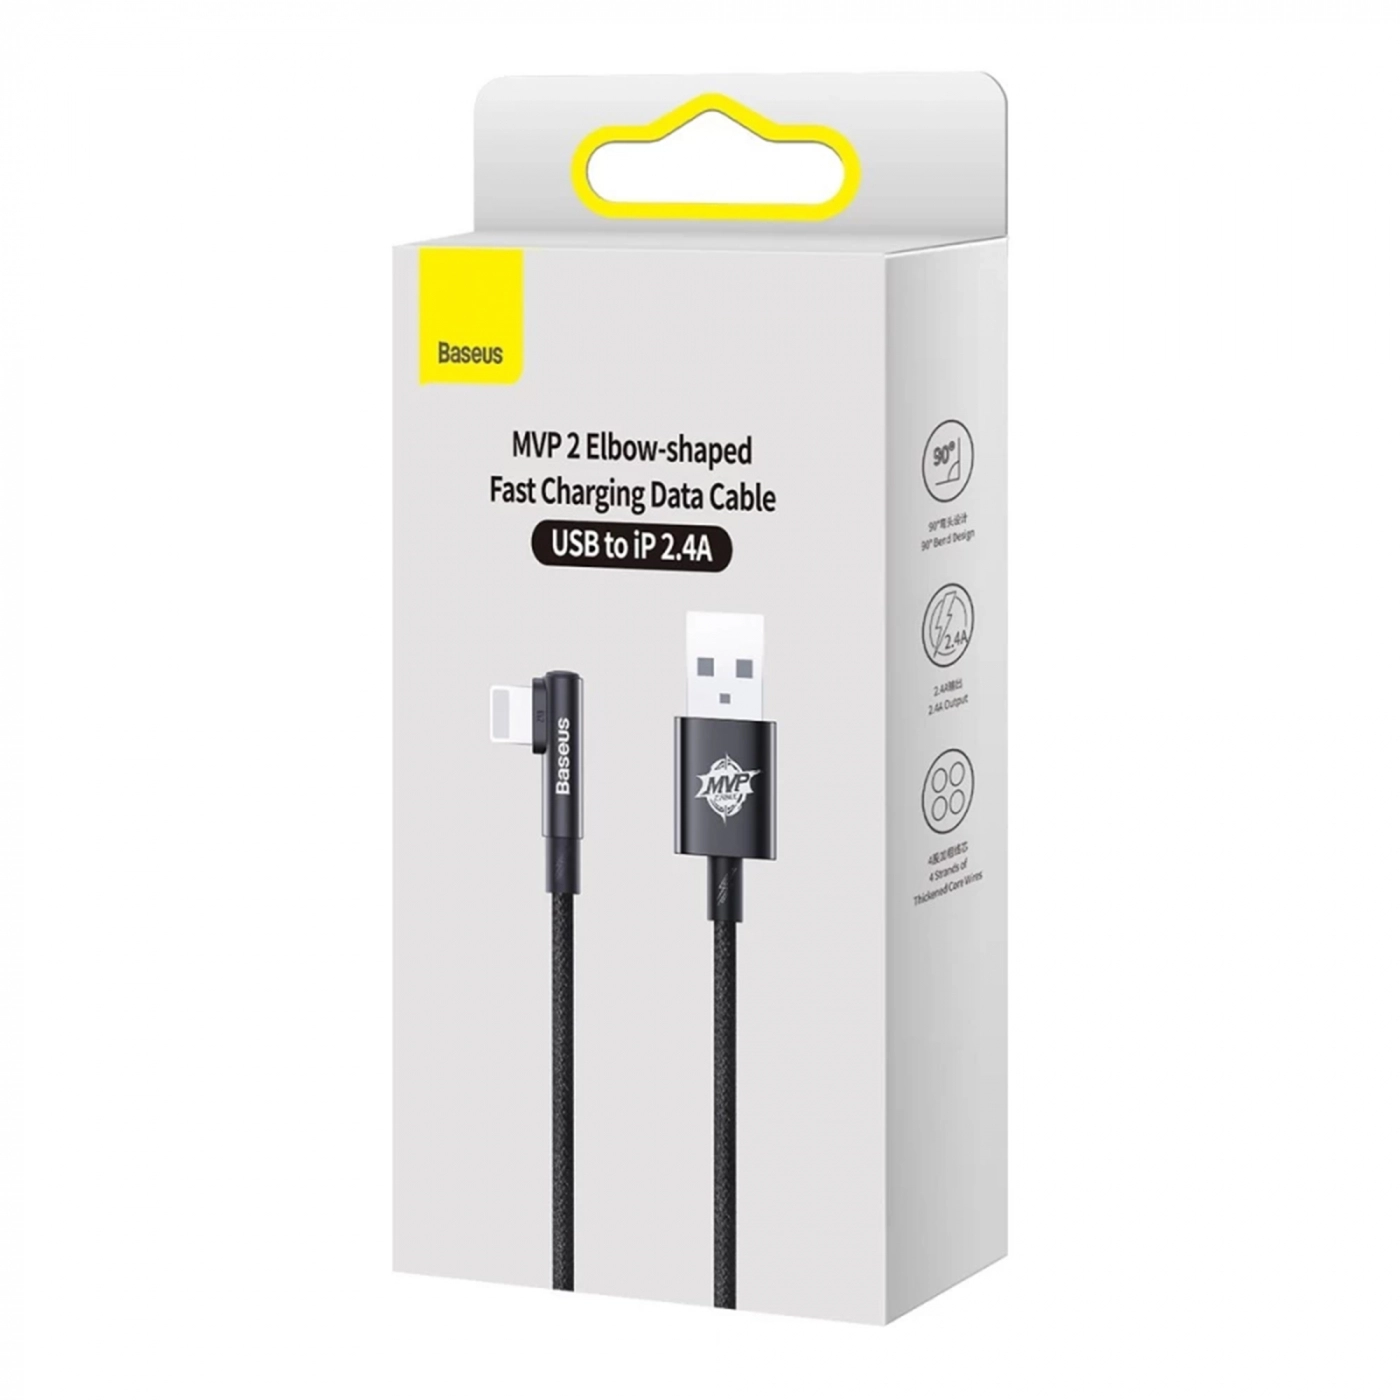 Купить Кабель Baseus MVP 2 Elbow-shaped Fast Charging Data Cable USB to iP 2.4A 2m Black - фото 8